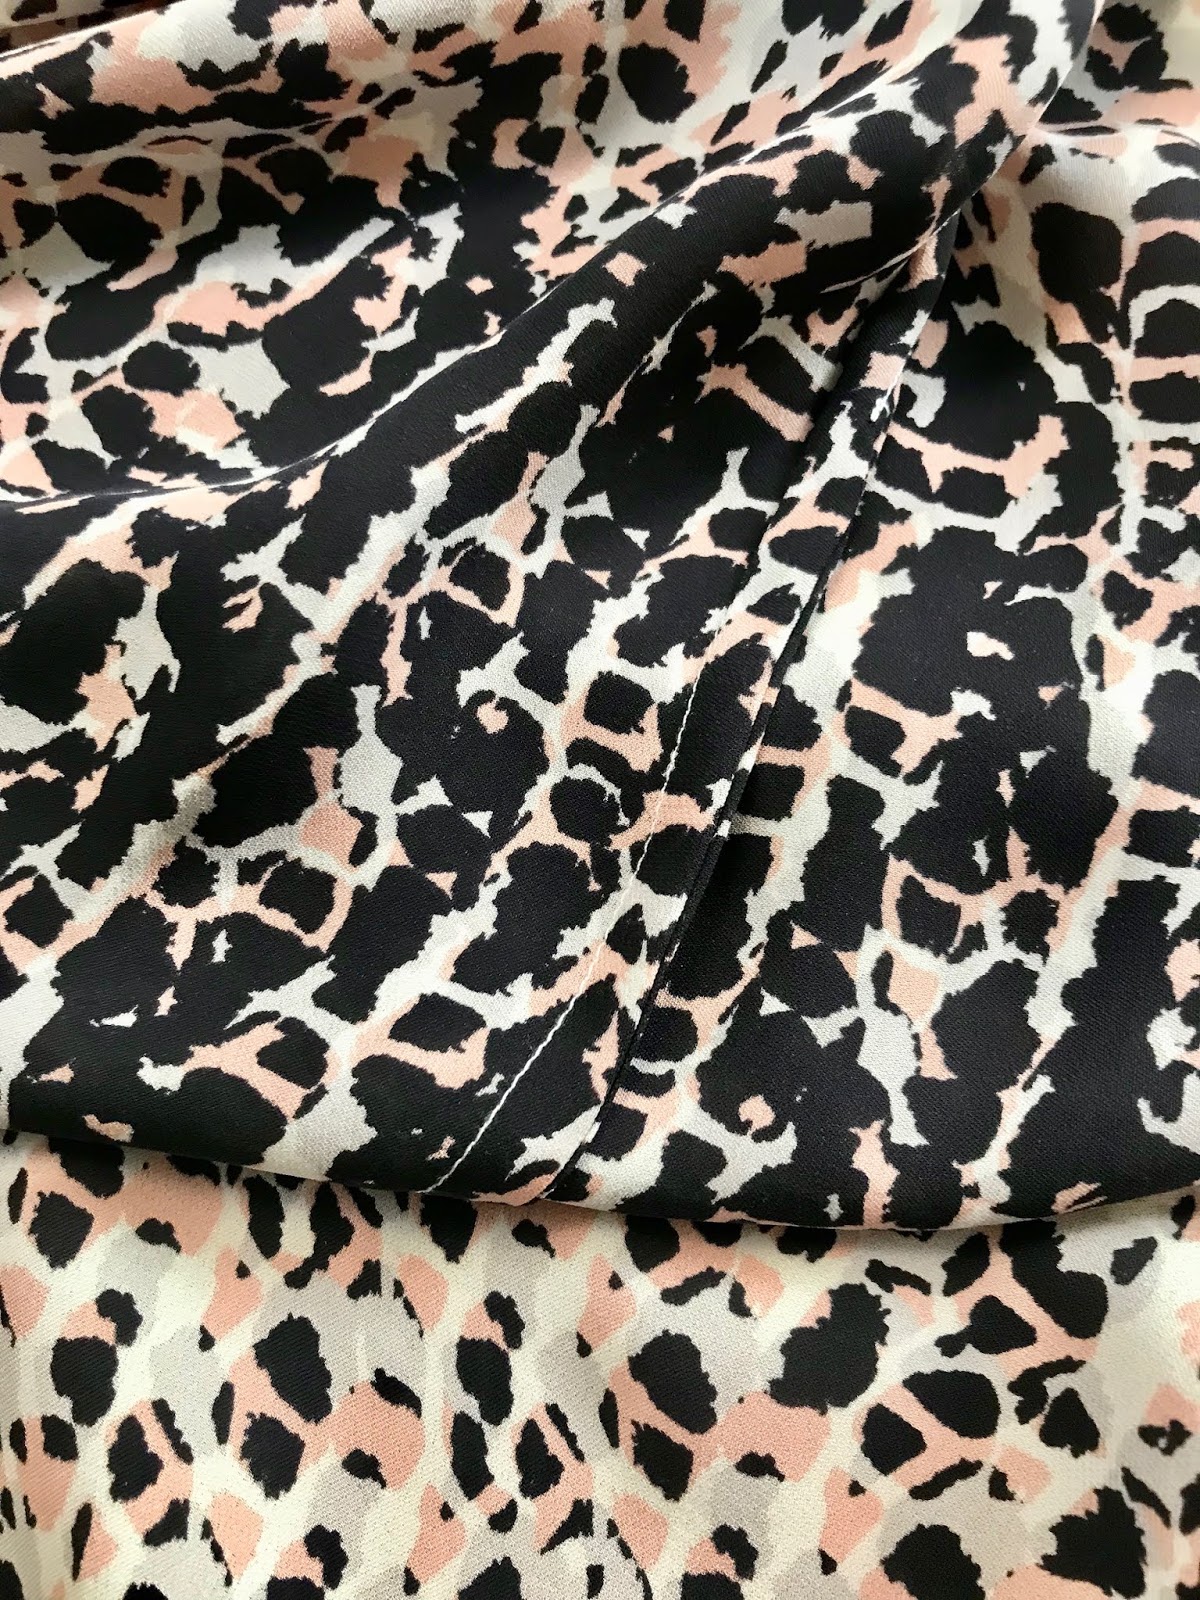 Suzuran no-waste kimono jacket pattern review - Cucicucicoo